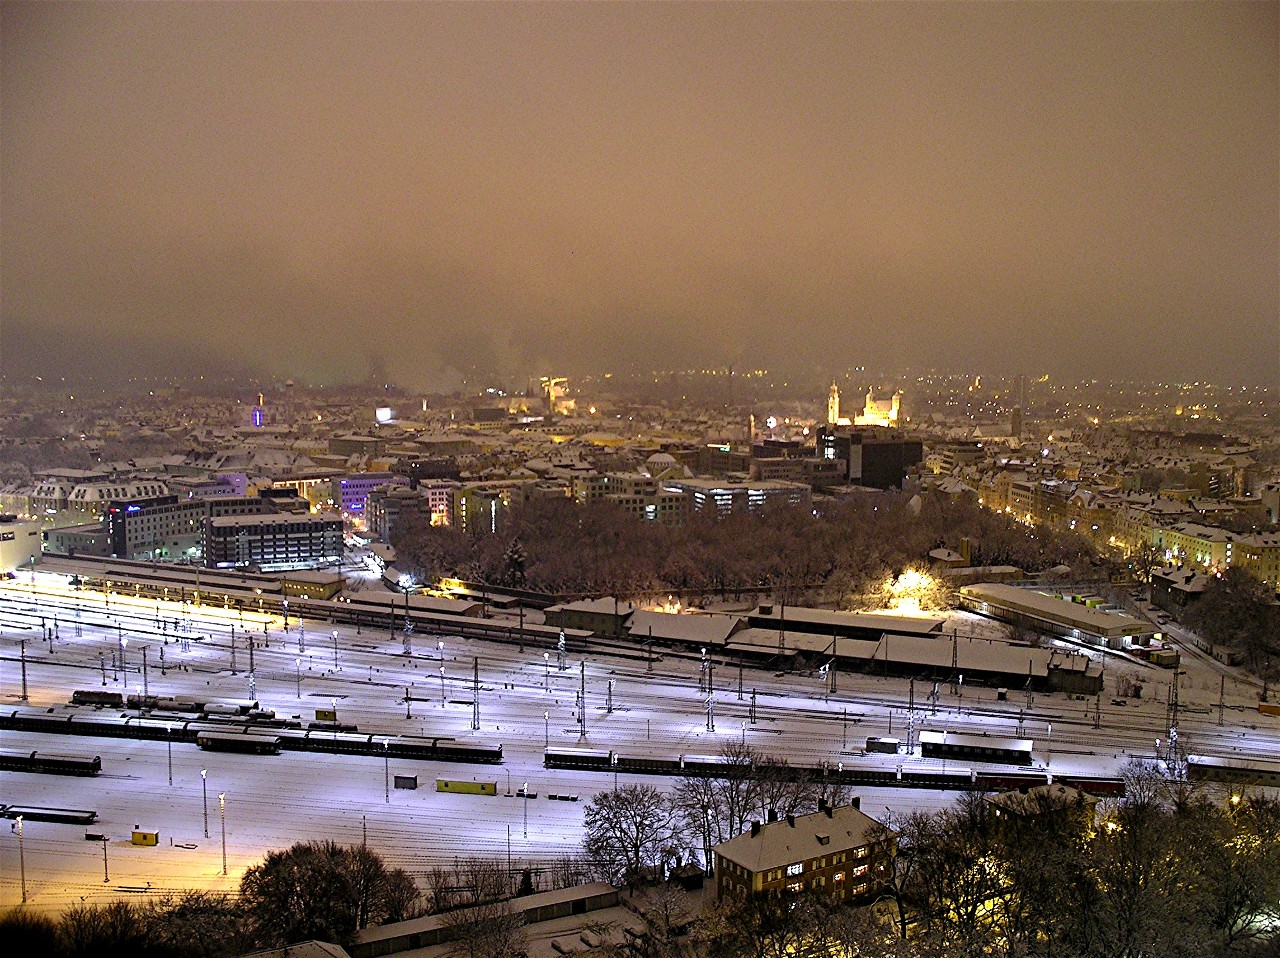 Hotelturm Nacht-Panorama